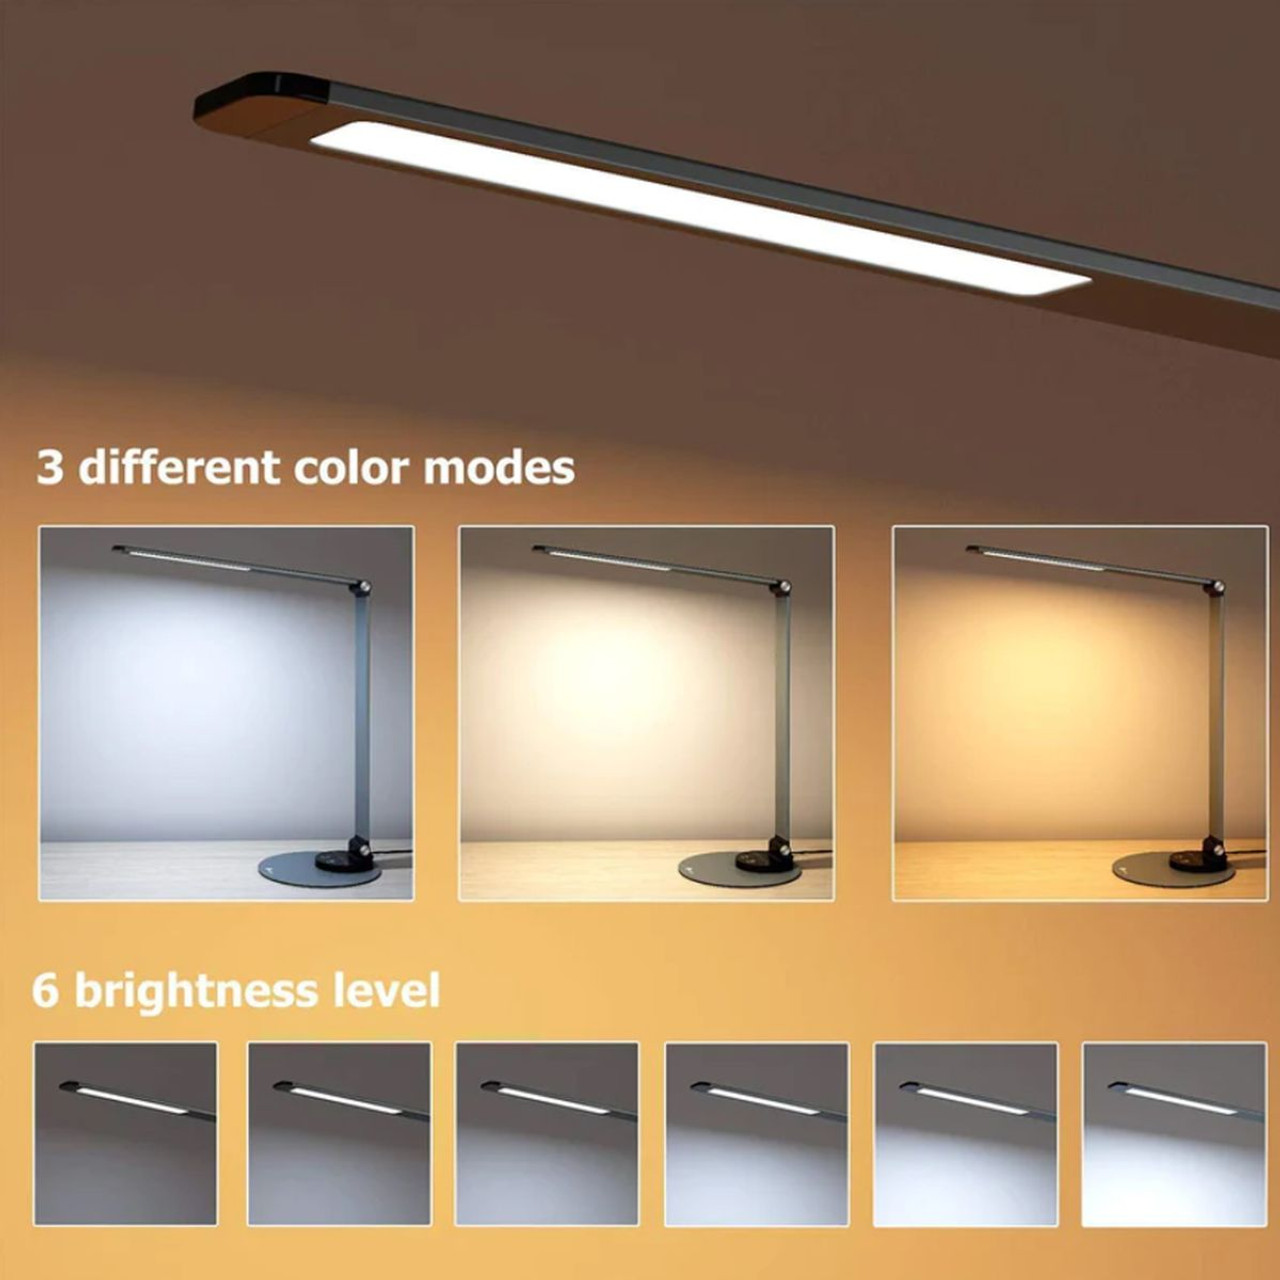 TaoTronics® Ultrathin LED Desk Lamp product image